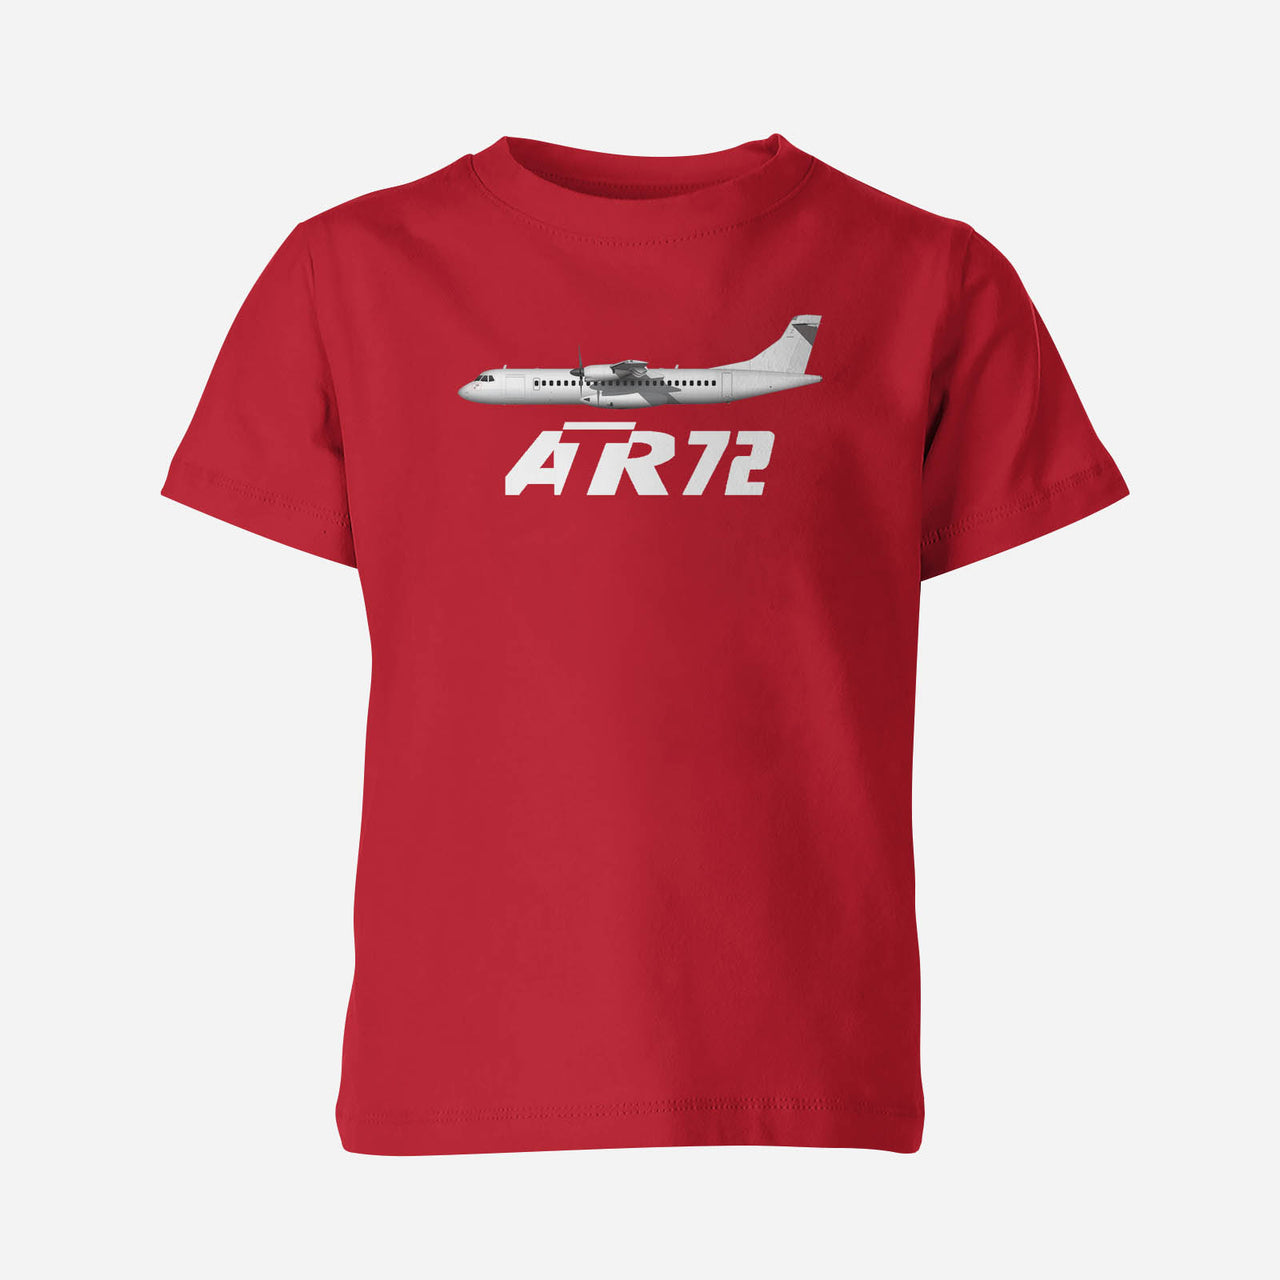 The ATR72 Designed Children T-Shirts